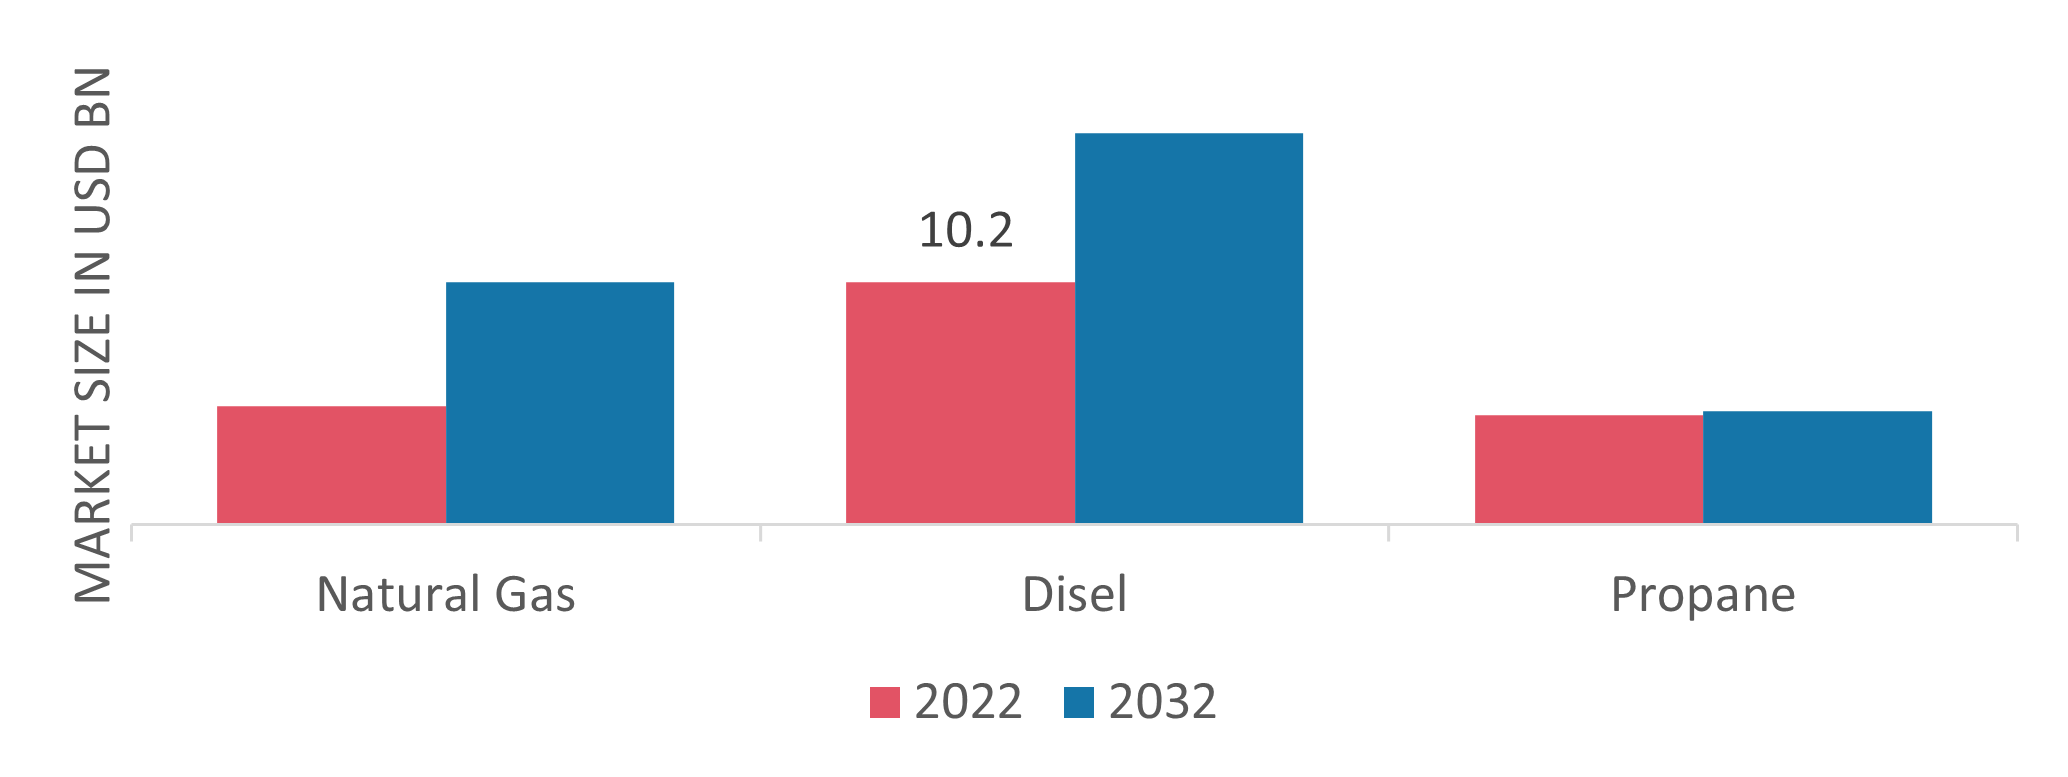 Genset Market, by Fuel Type, 2022 & 2032 (USD Billion)